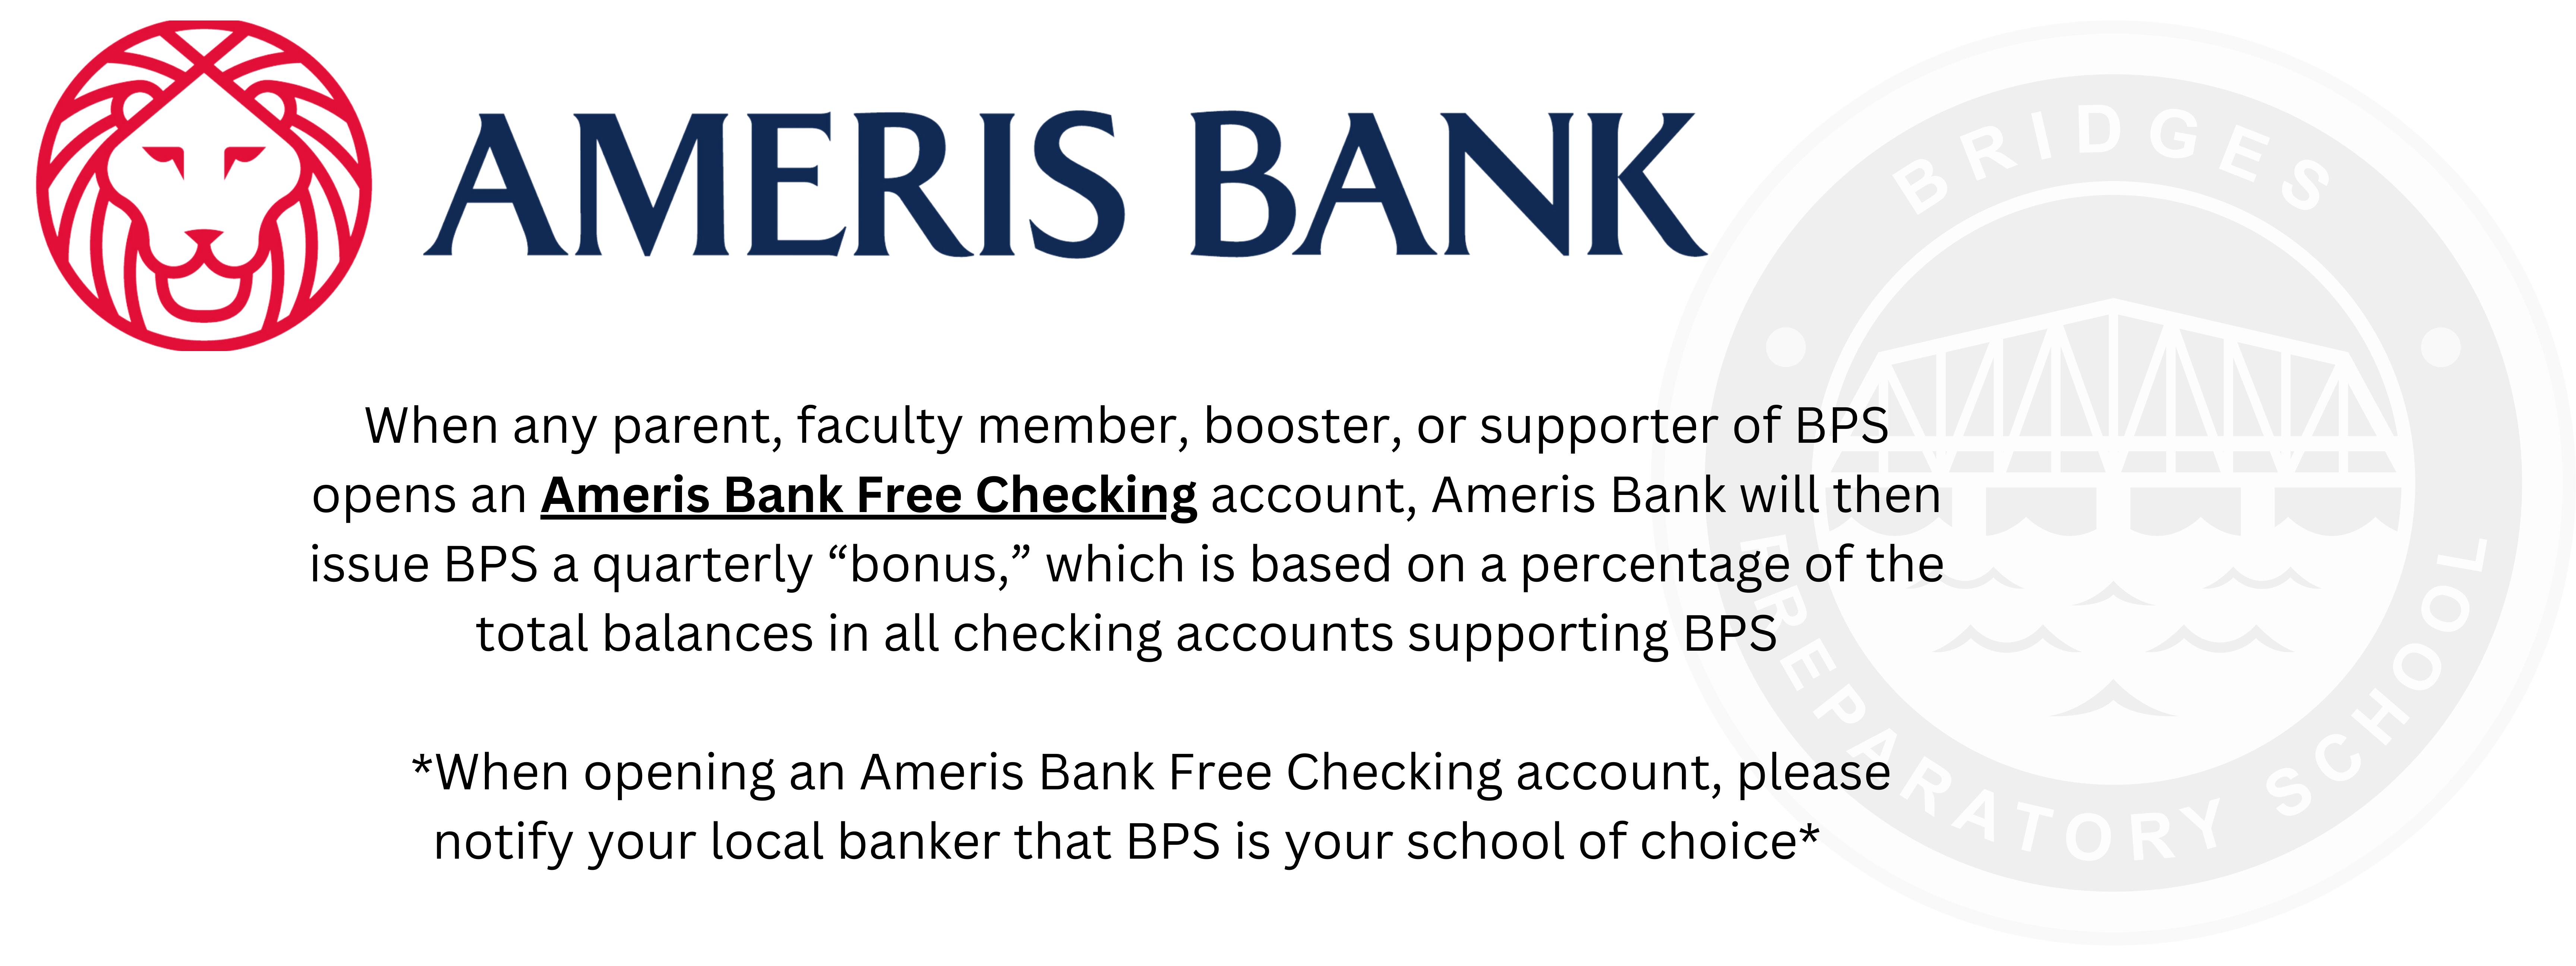 Ameris Bank company logo and info